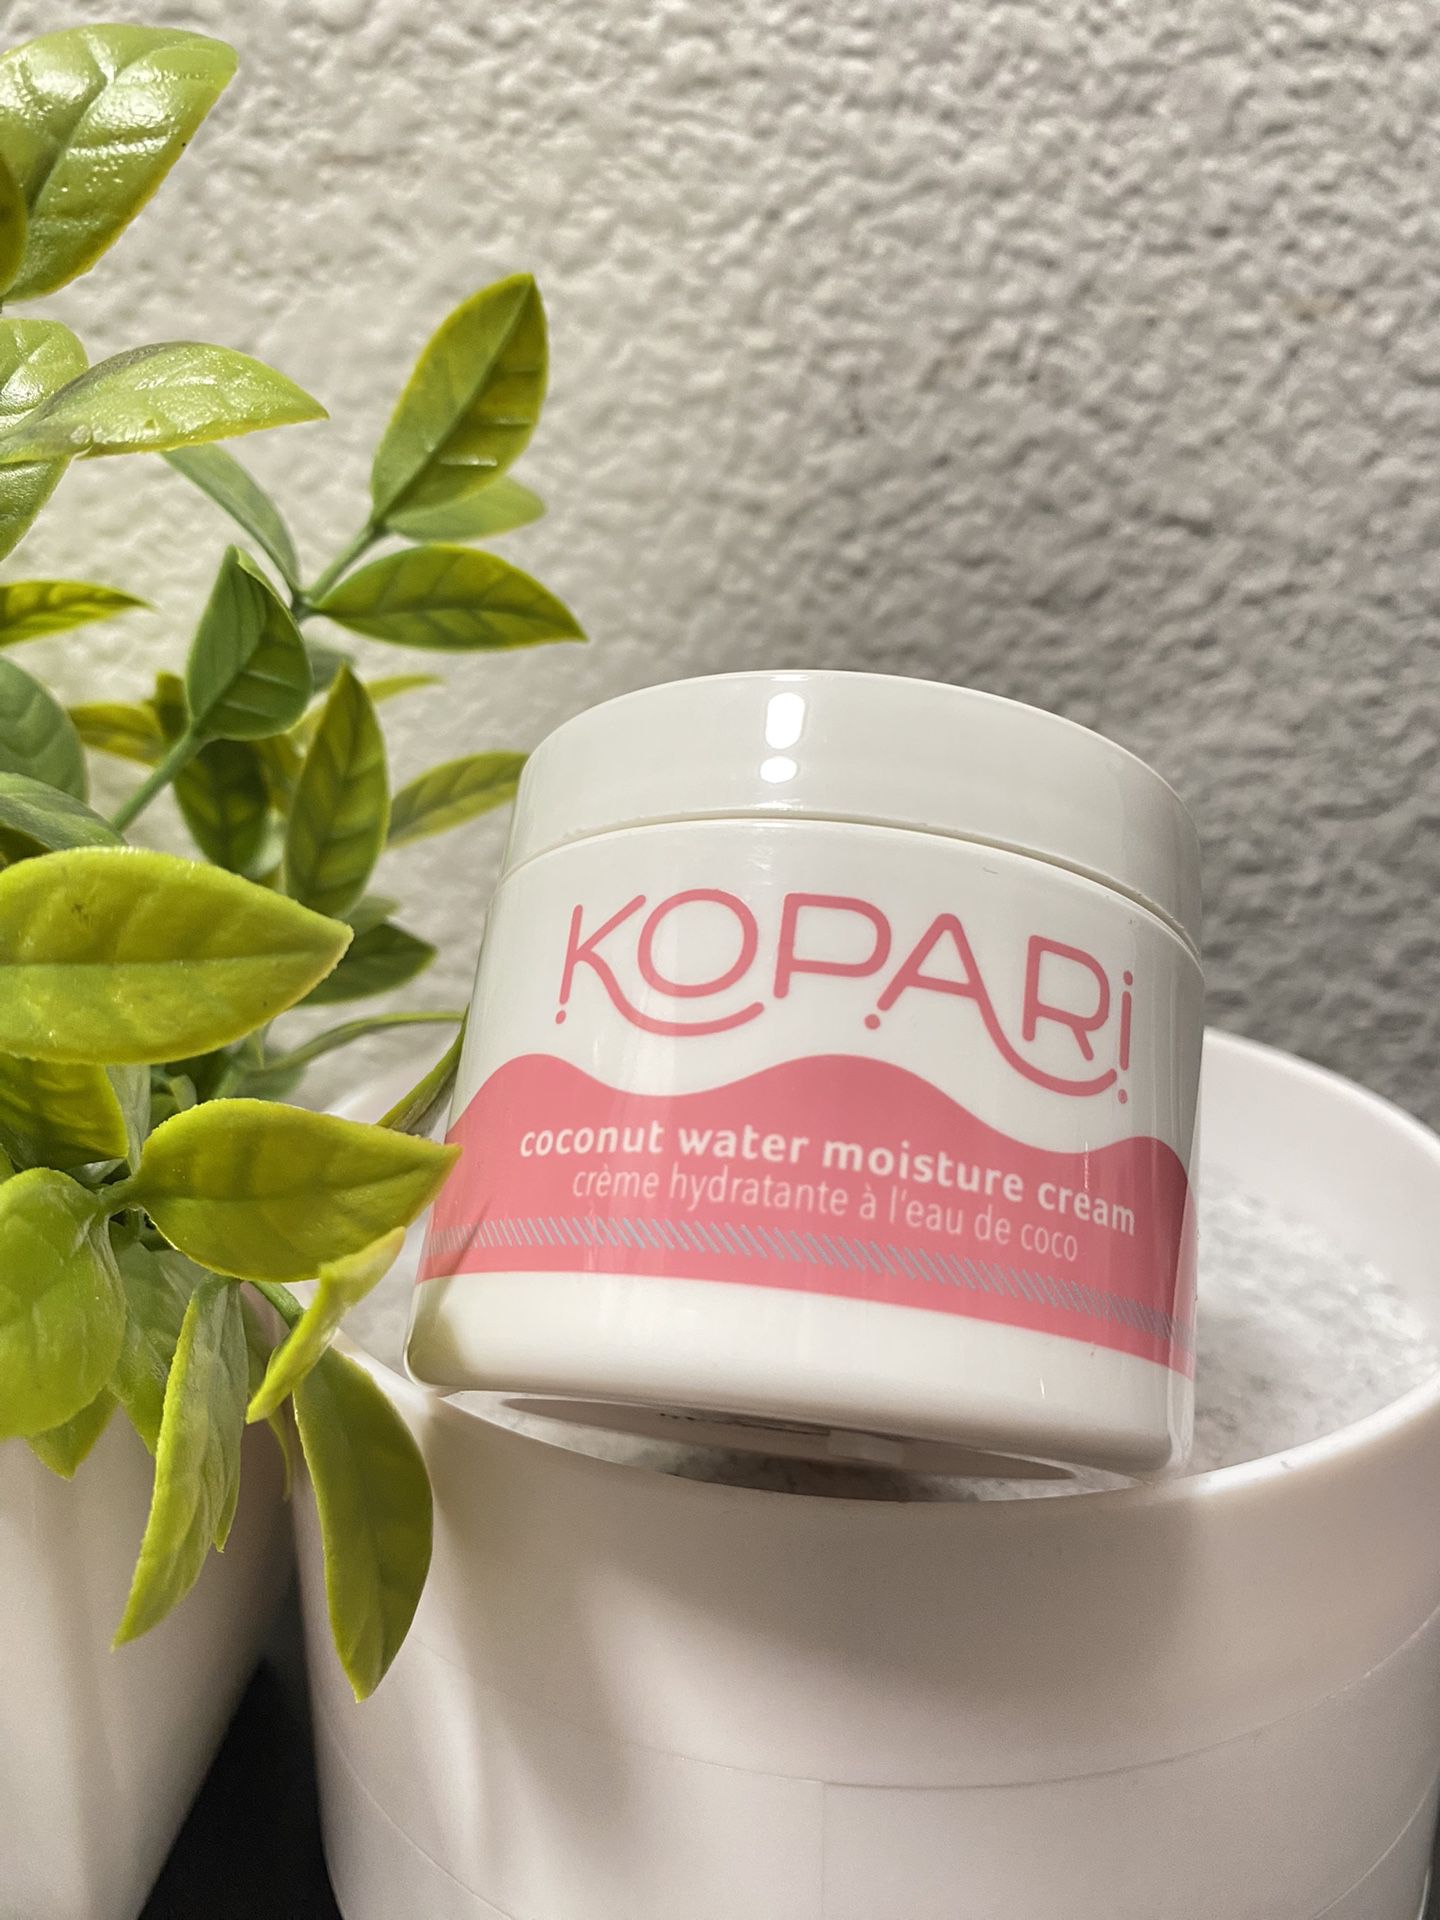 Kopari Beauty Coconut Water Moisture Cream